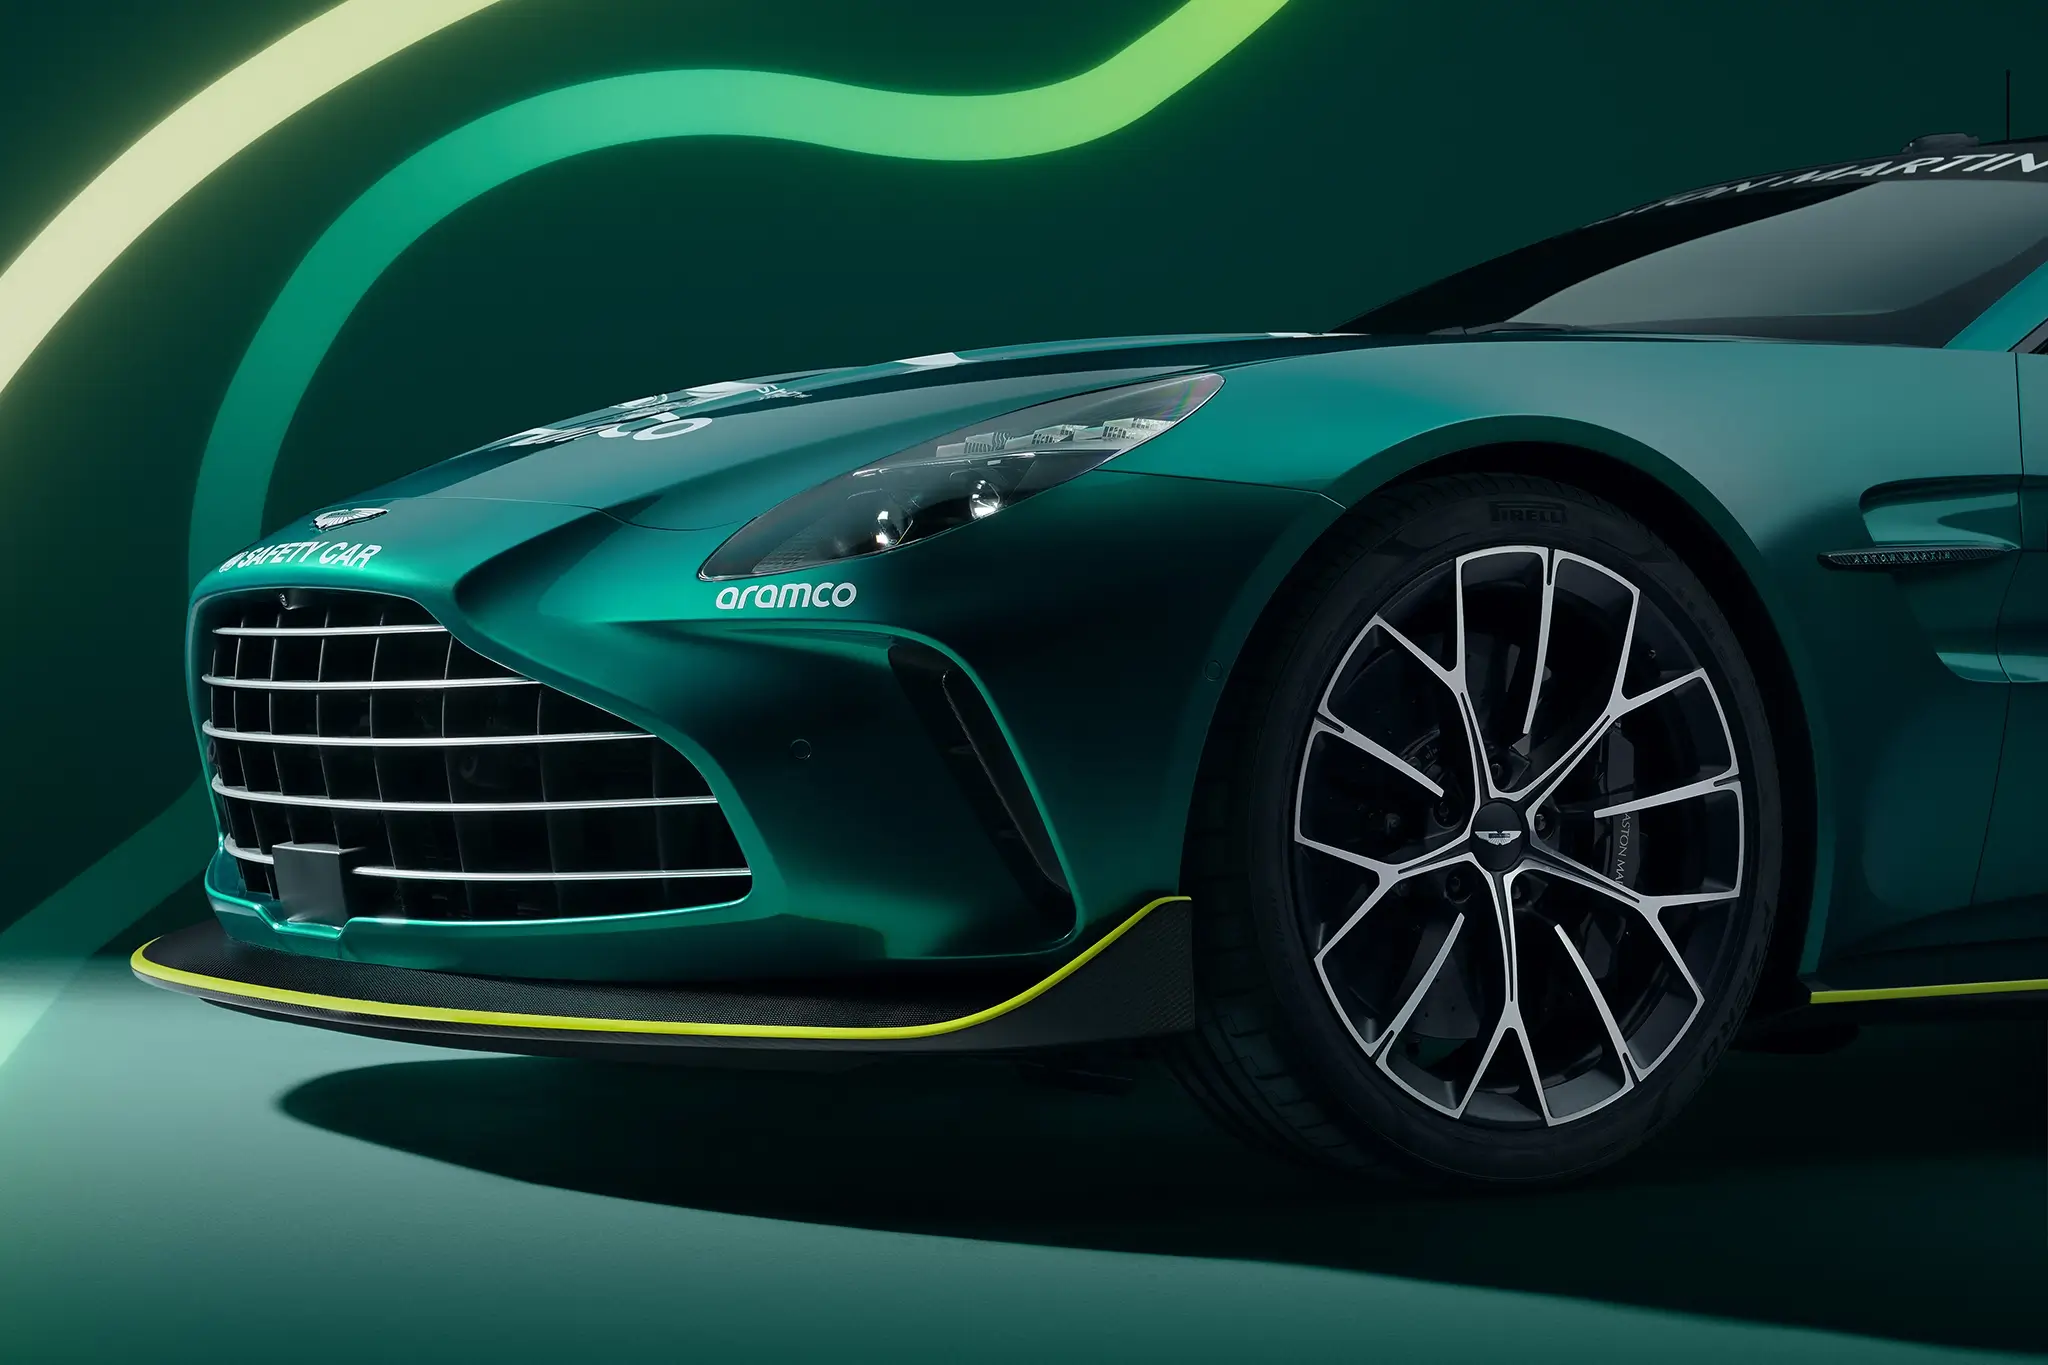 Aston Martin Vantage Safety Car - detalhe da frente